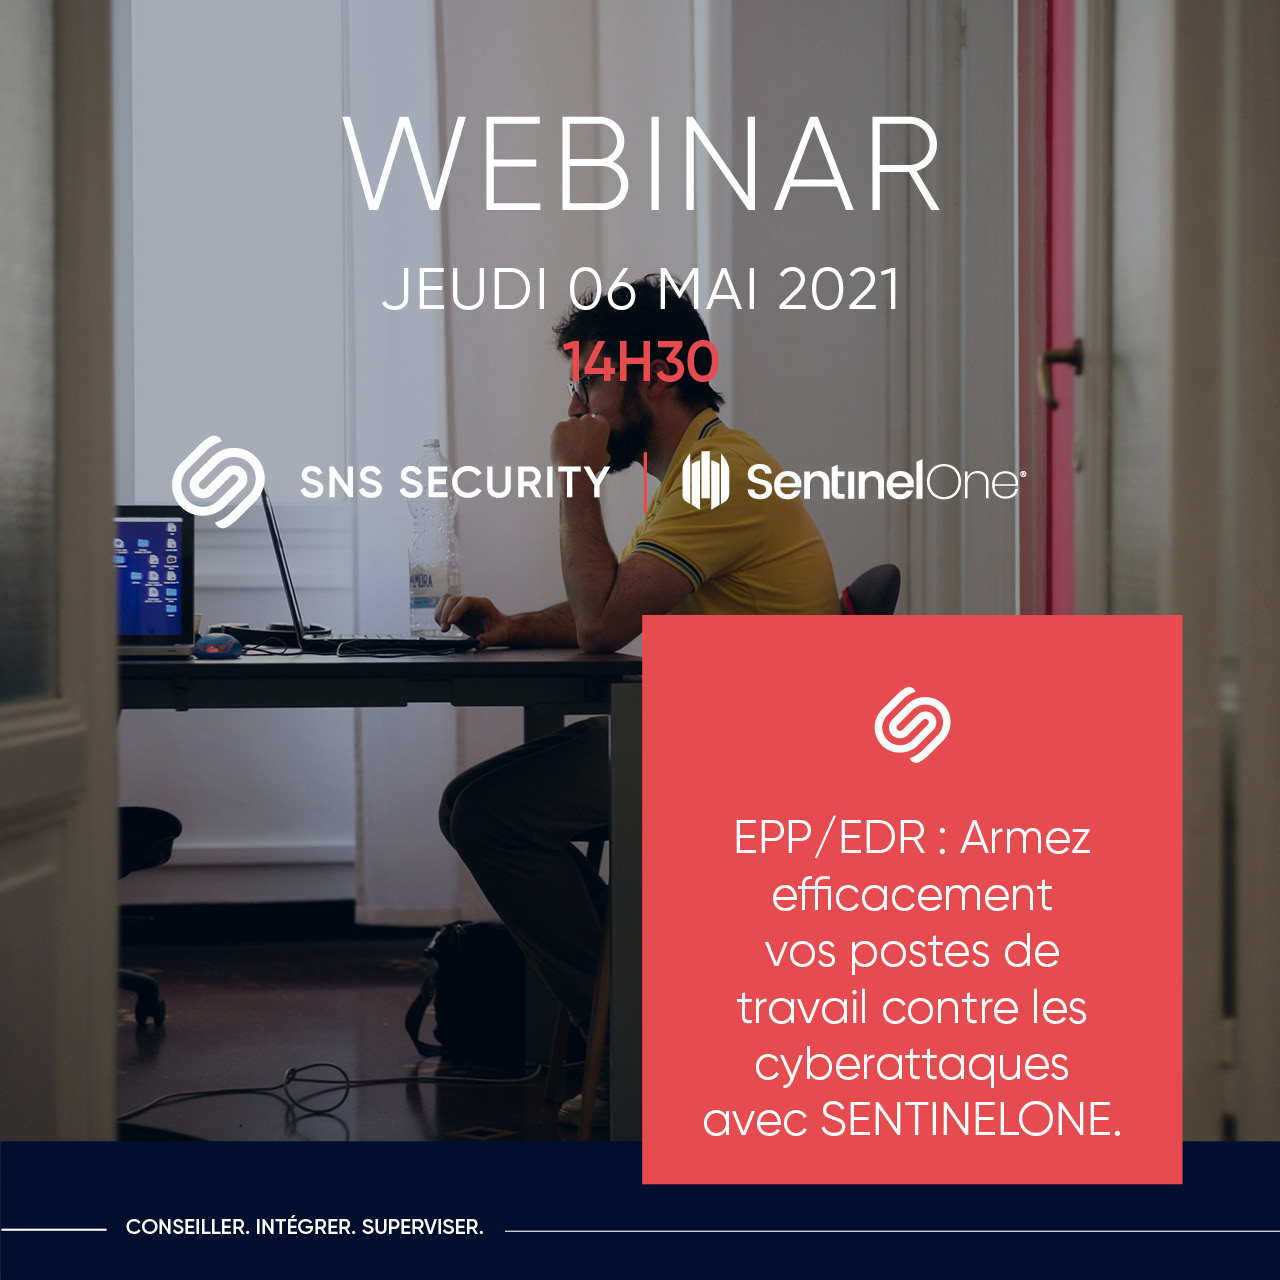 webinar sns security sentinelone protection endpoint epp edr 6 mai 2021